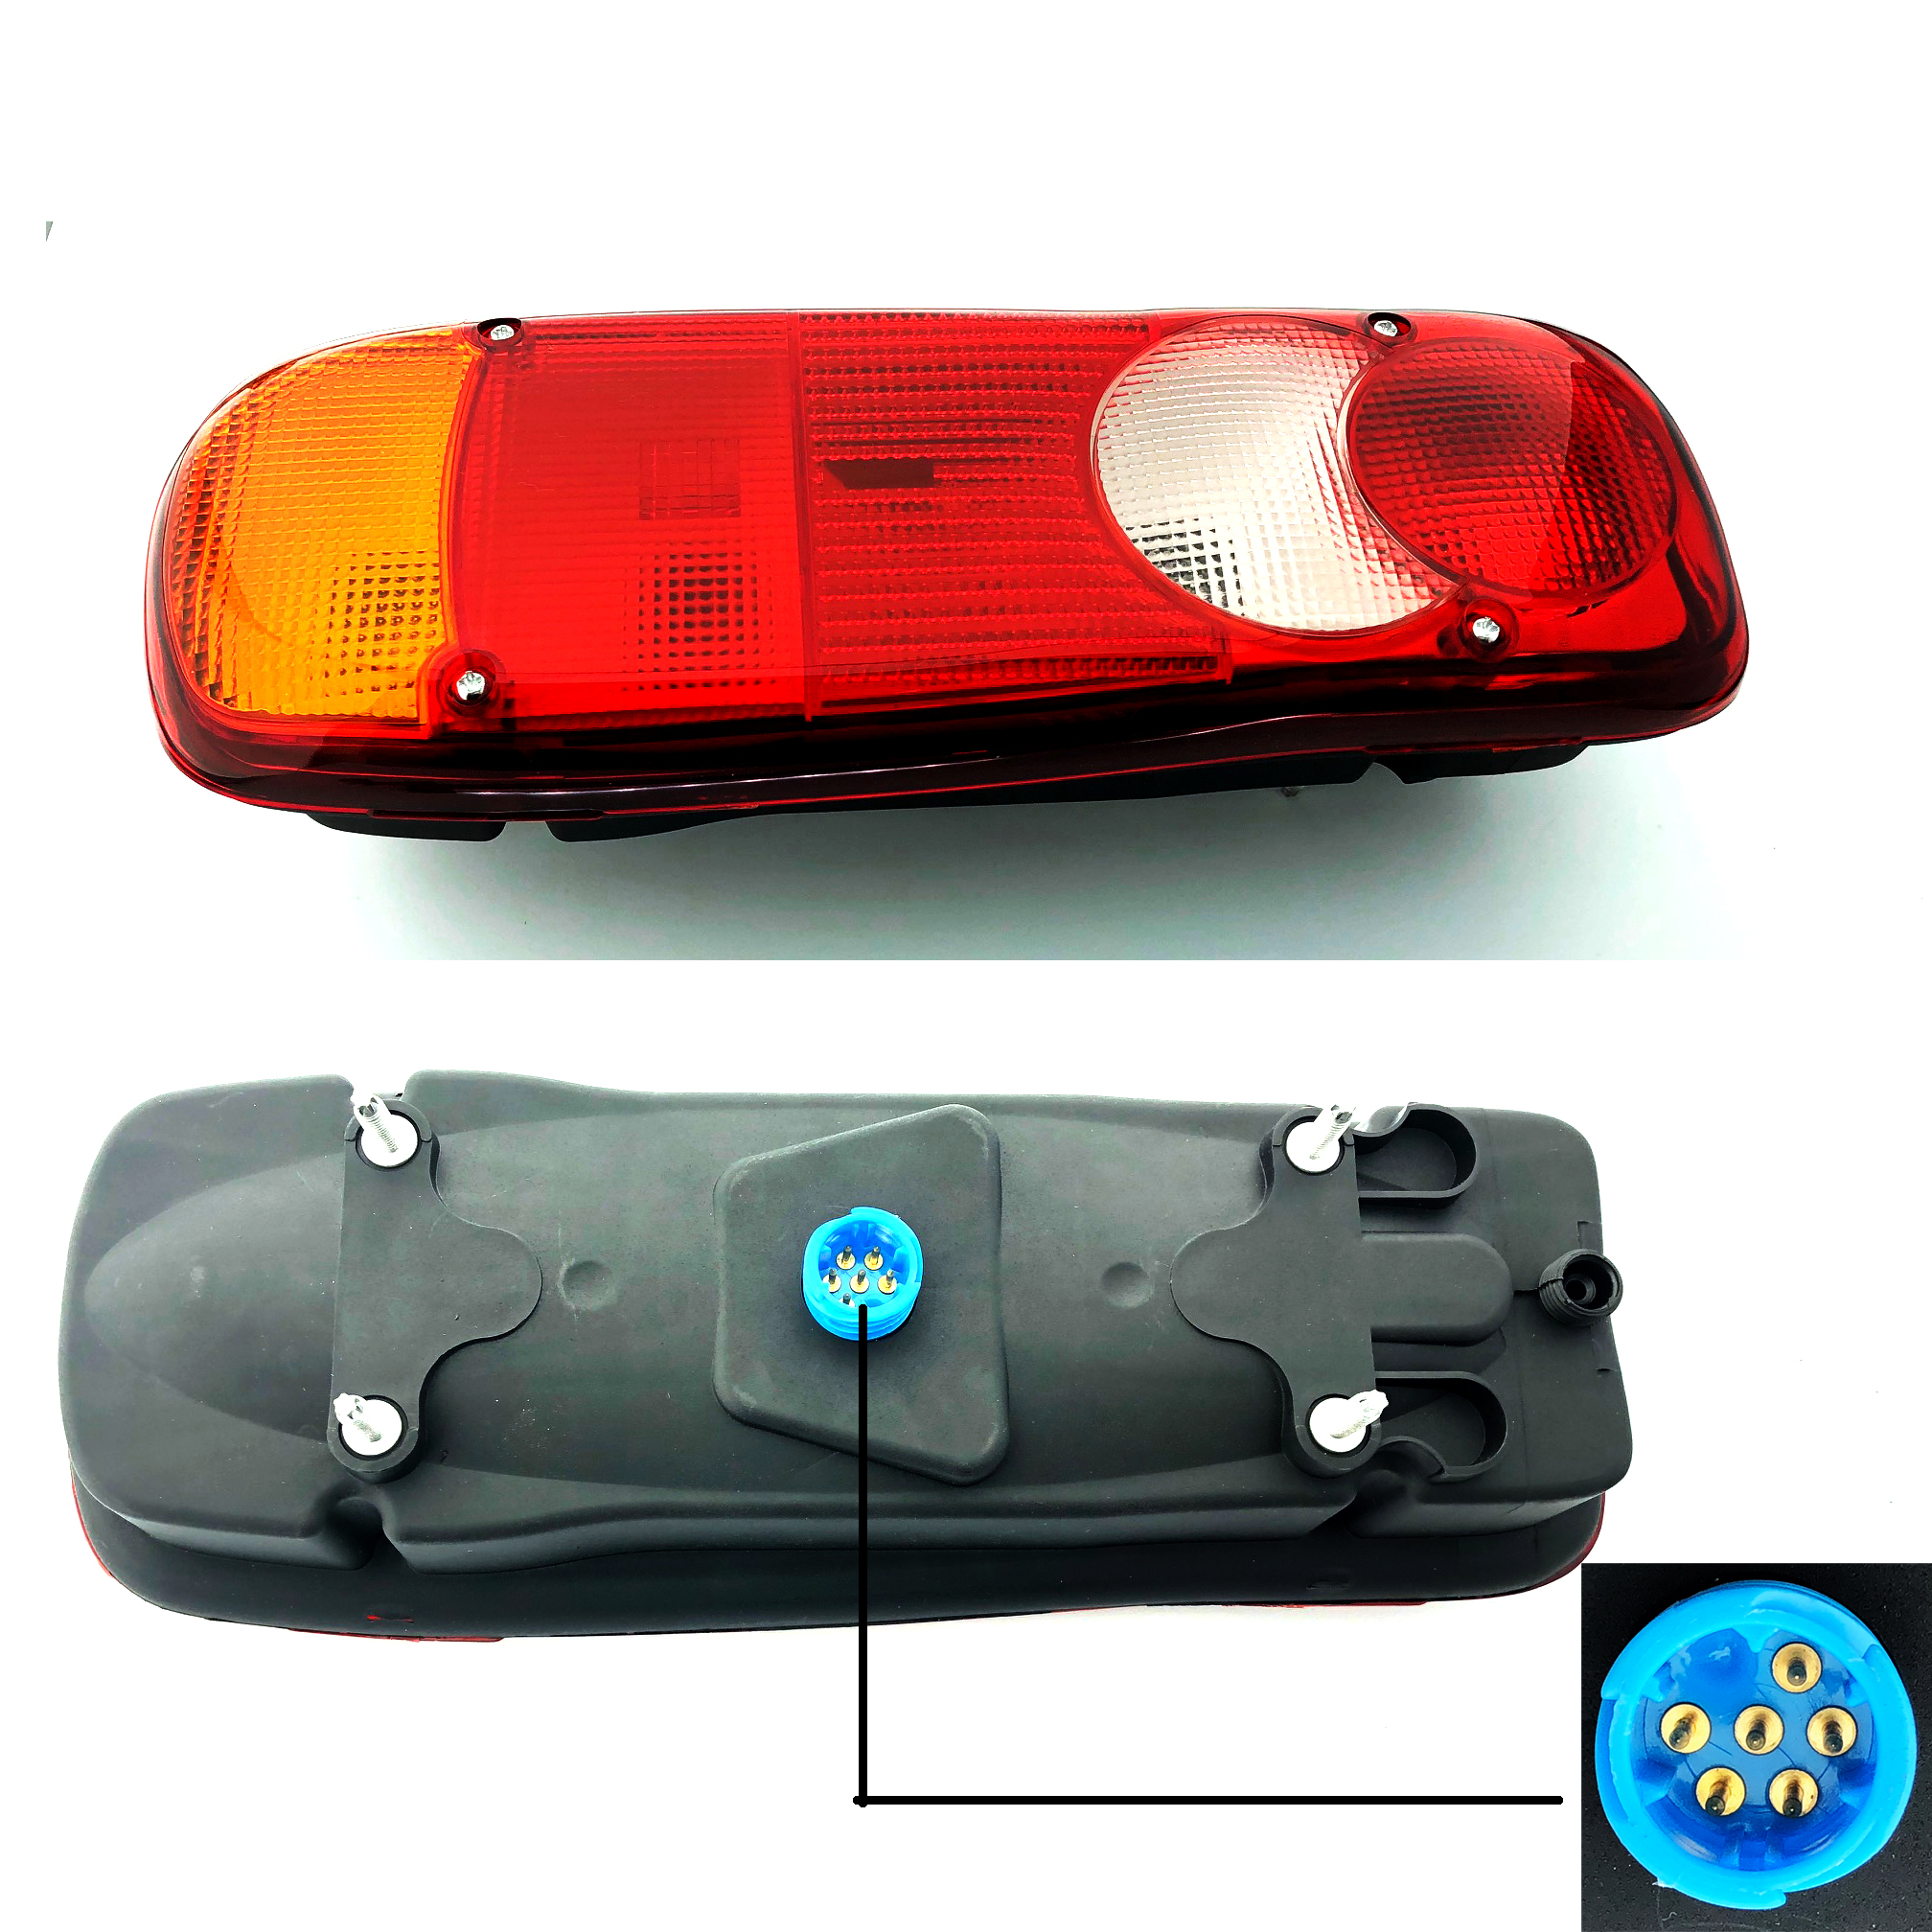 Peugeot Boxer Chasis Cab (Lamp Lights) VAN REAR LAMP LIGHT RIGHT HAND ( UK Driver Side ) 2012 to 2020 – VAN REAR LAMP LIGHT